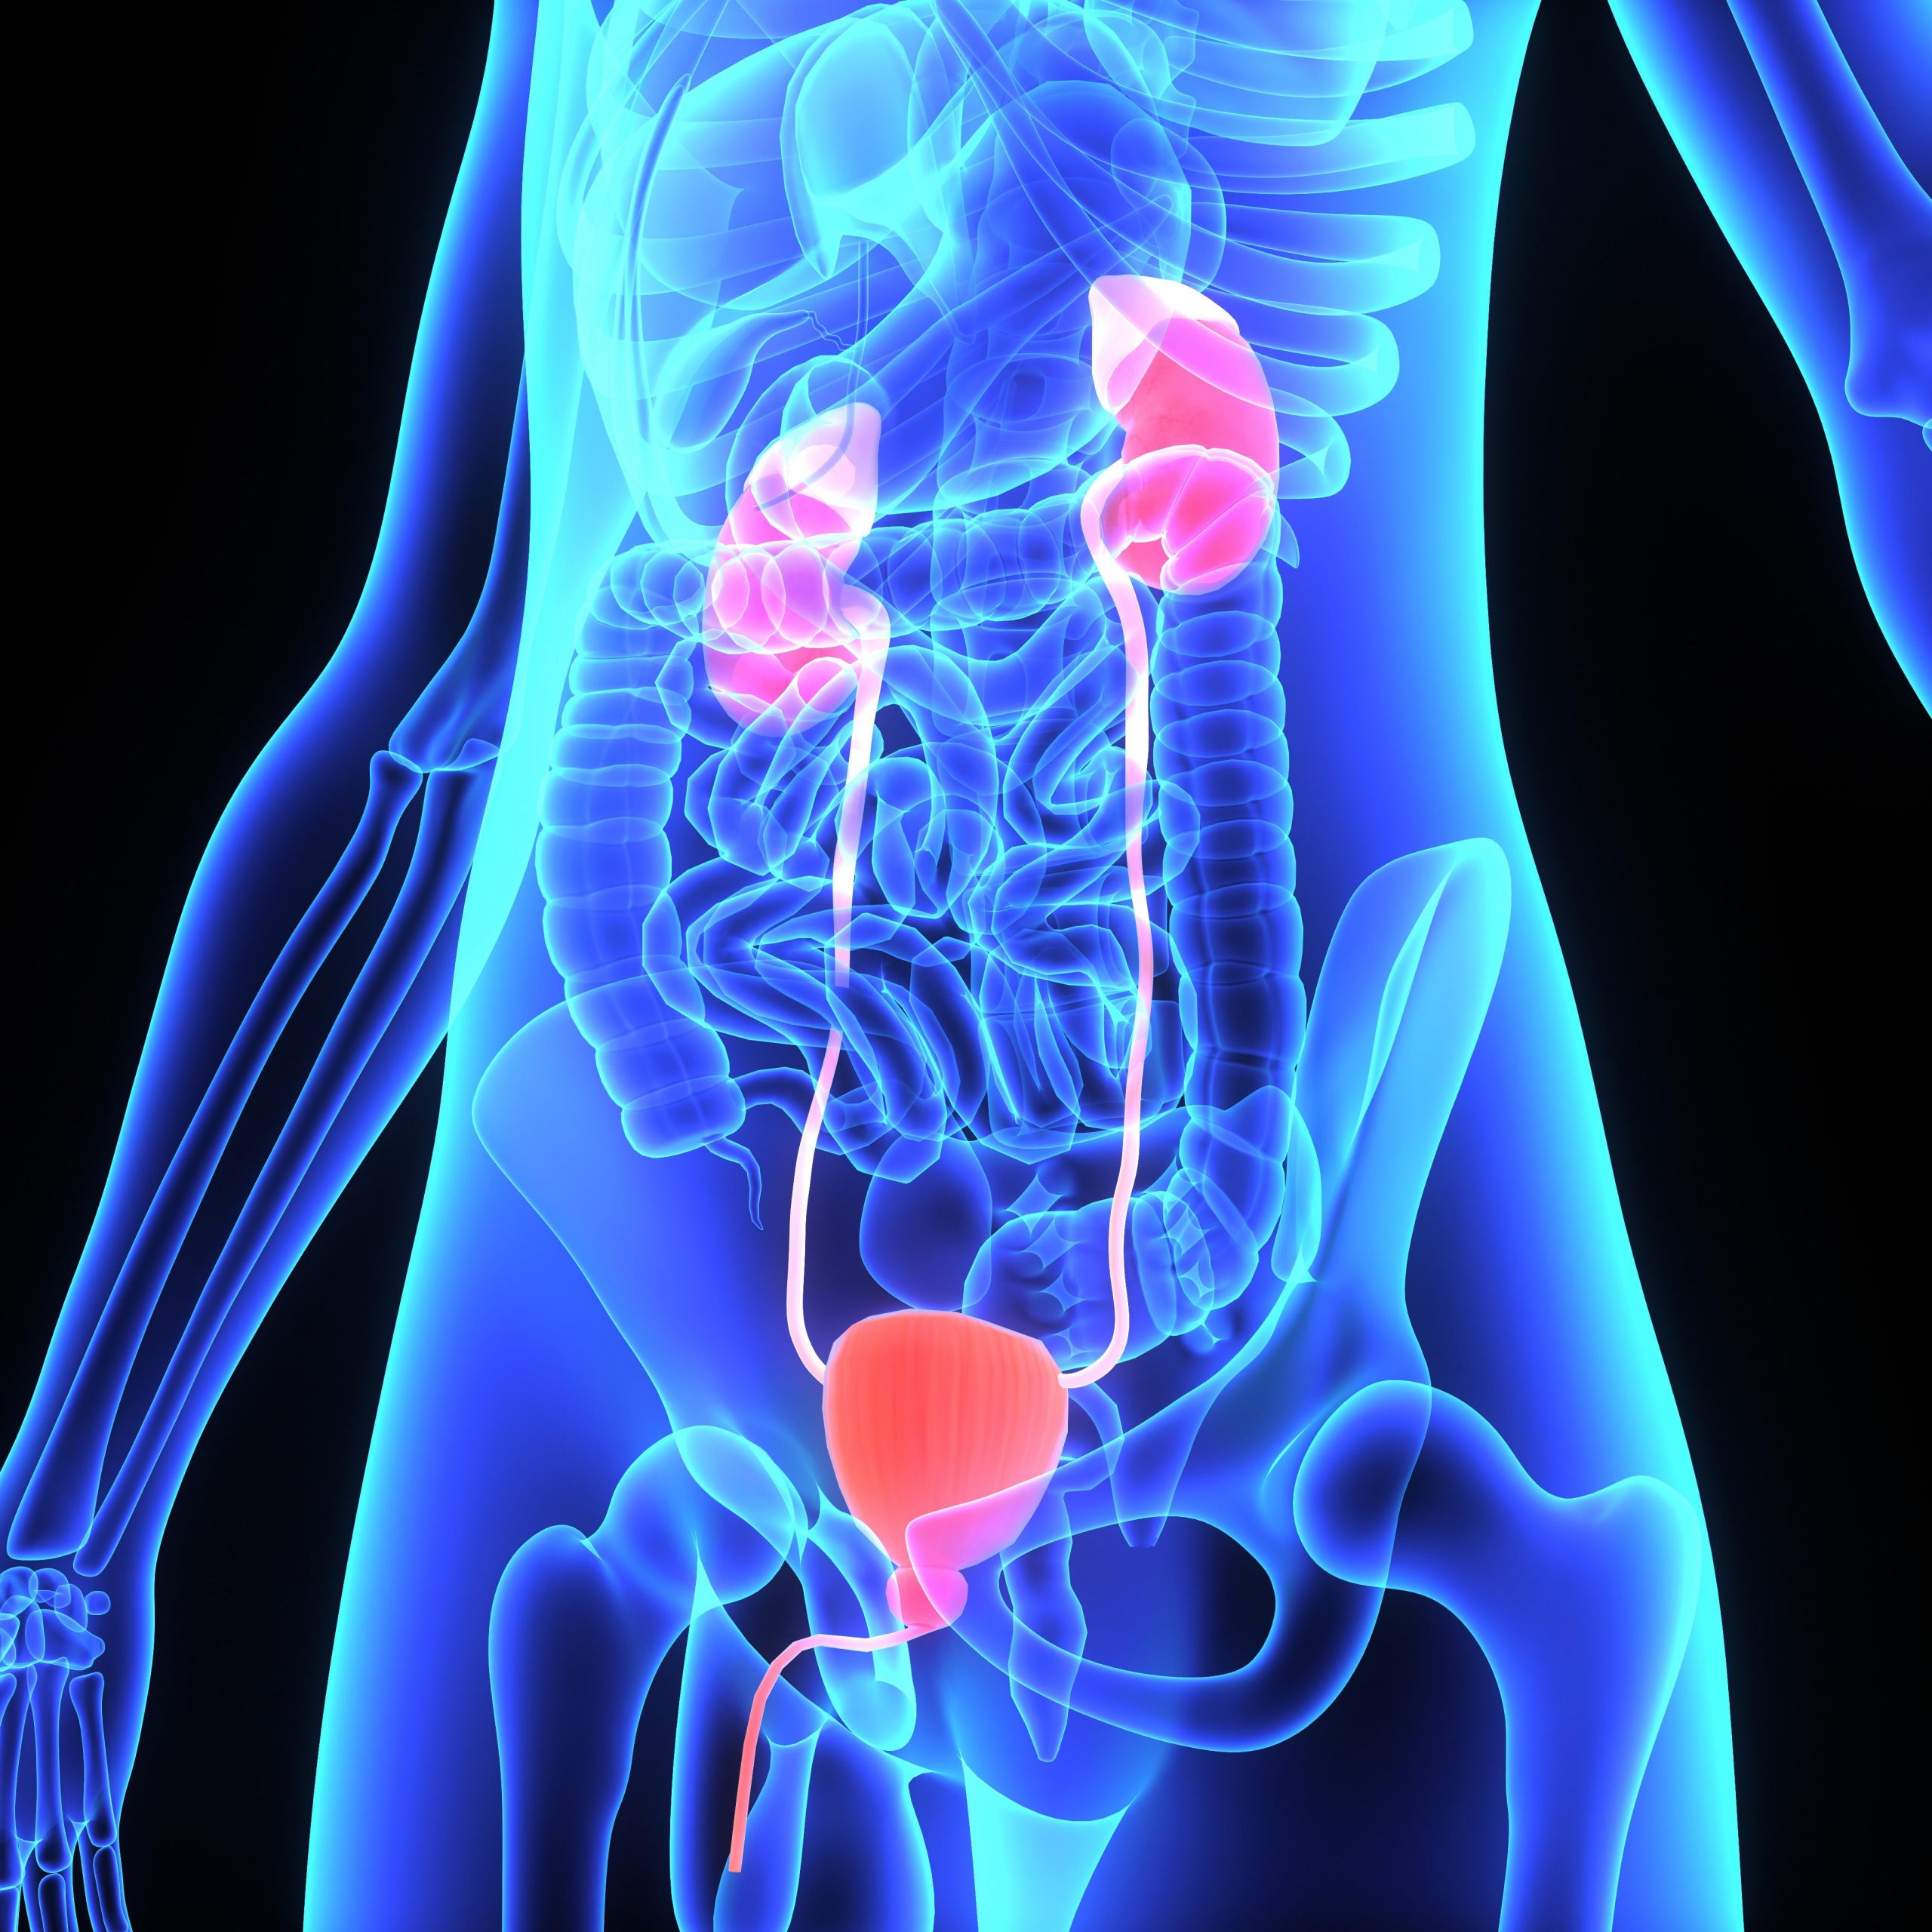 Kidney Stones (renal Colic)